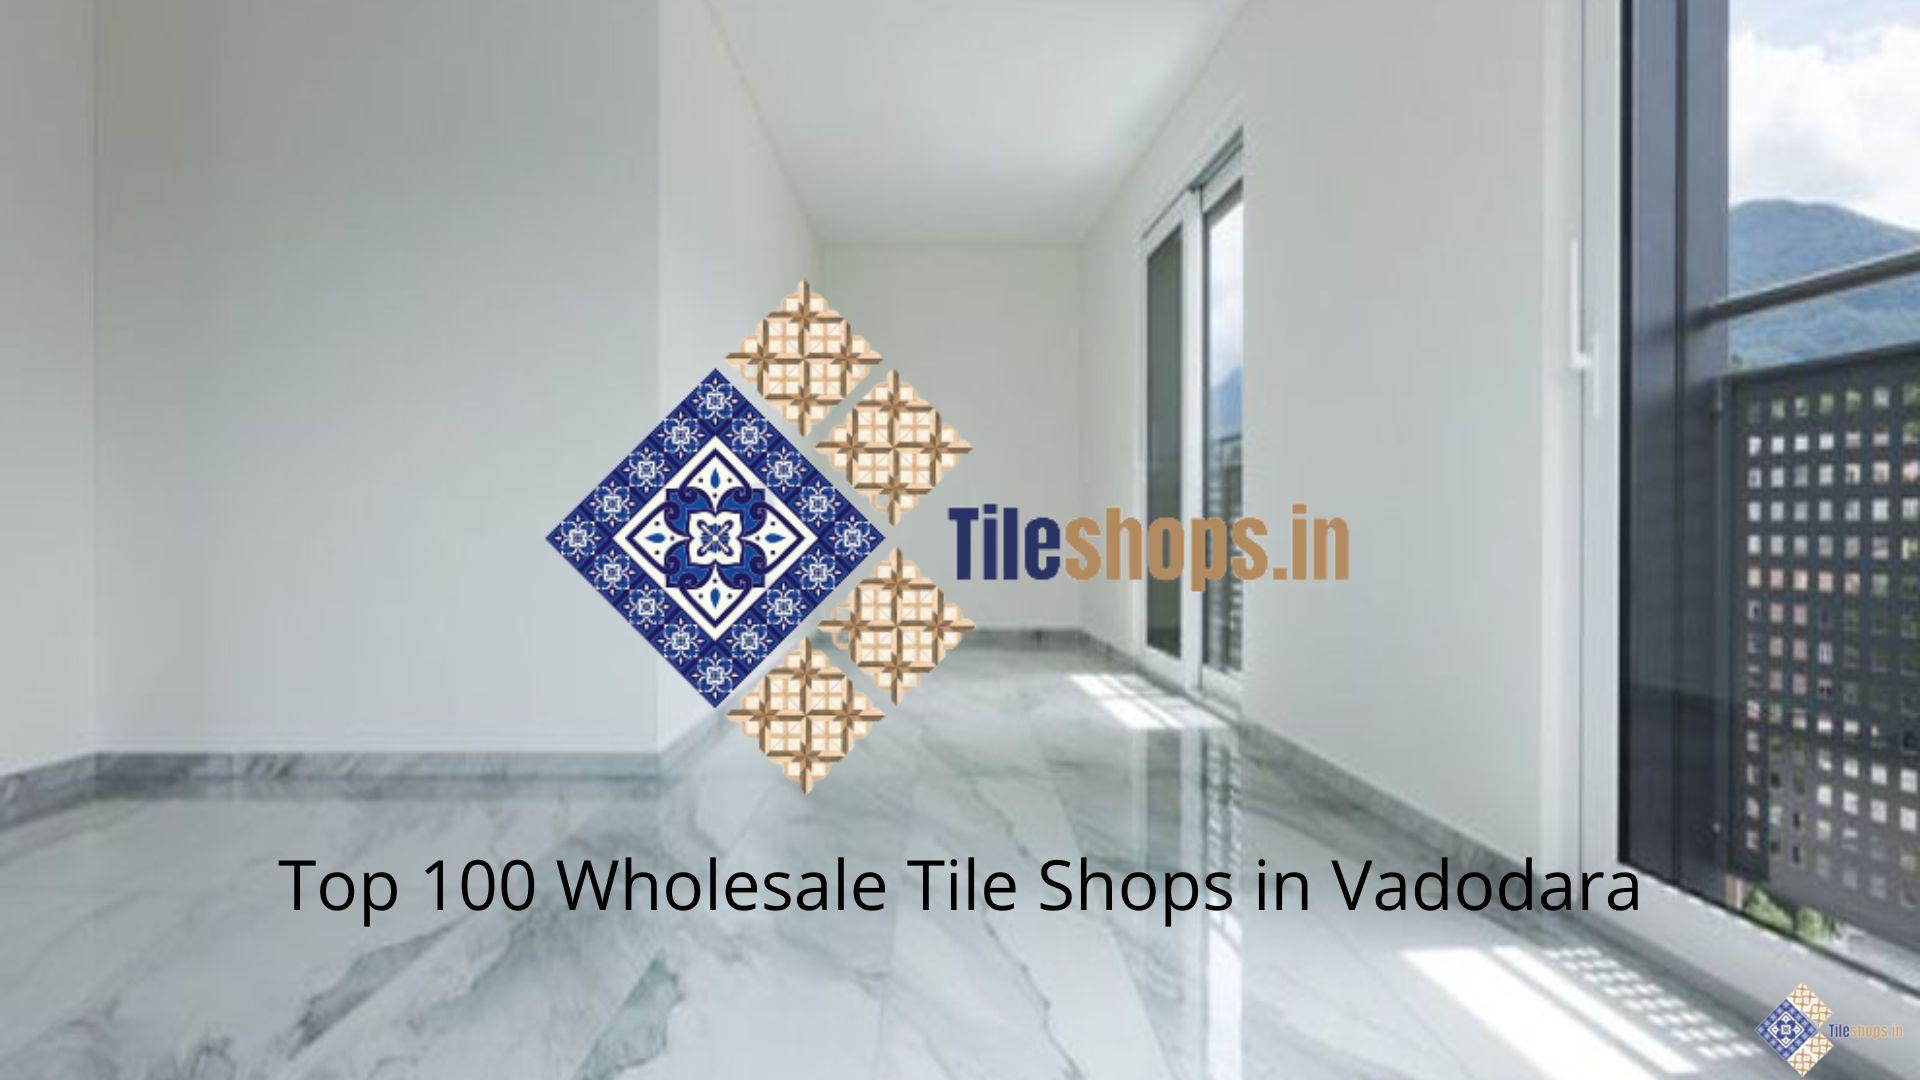 Top 100 Wholesale Tile Shops in Vadodara